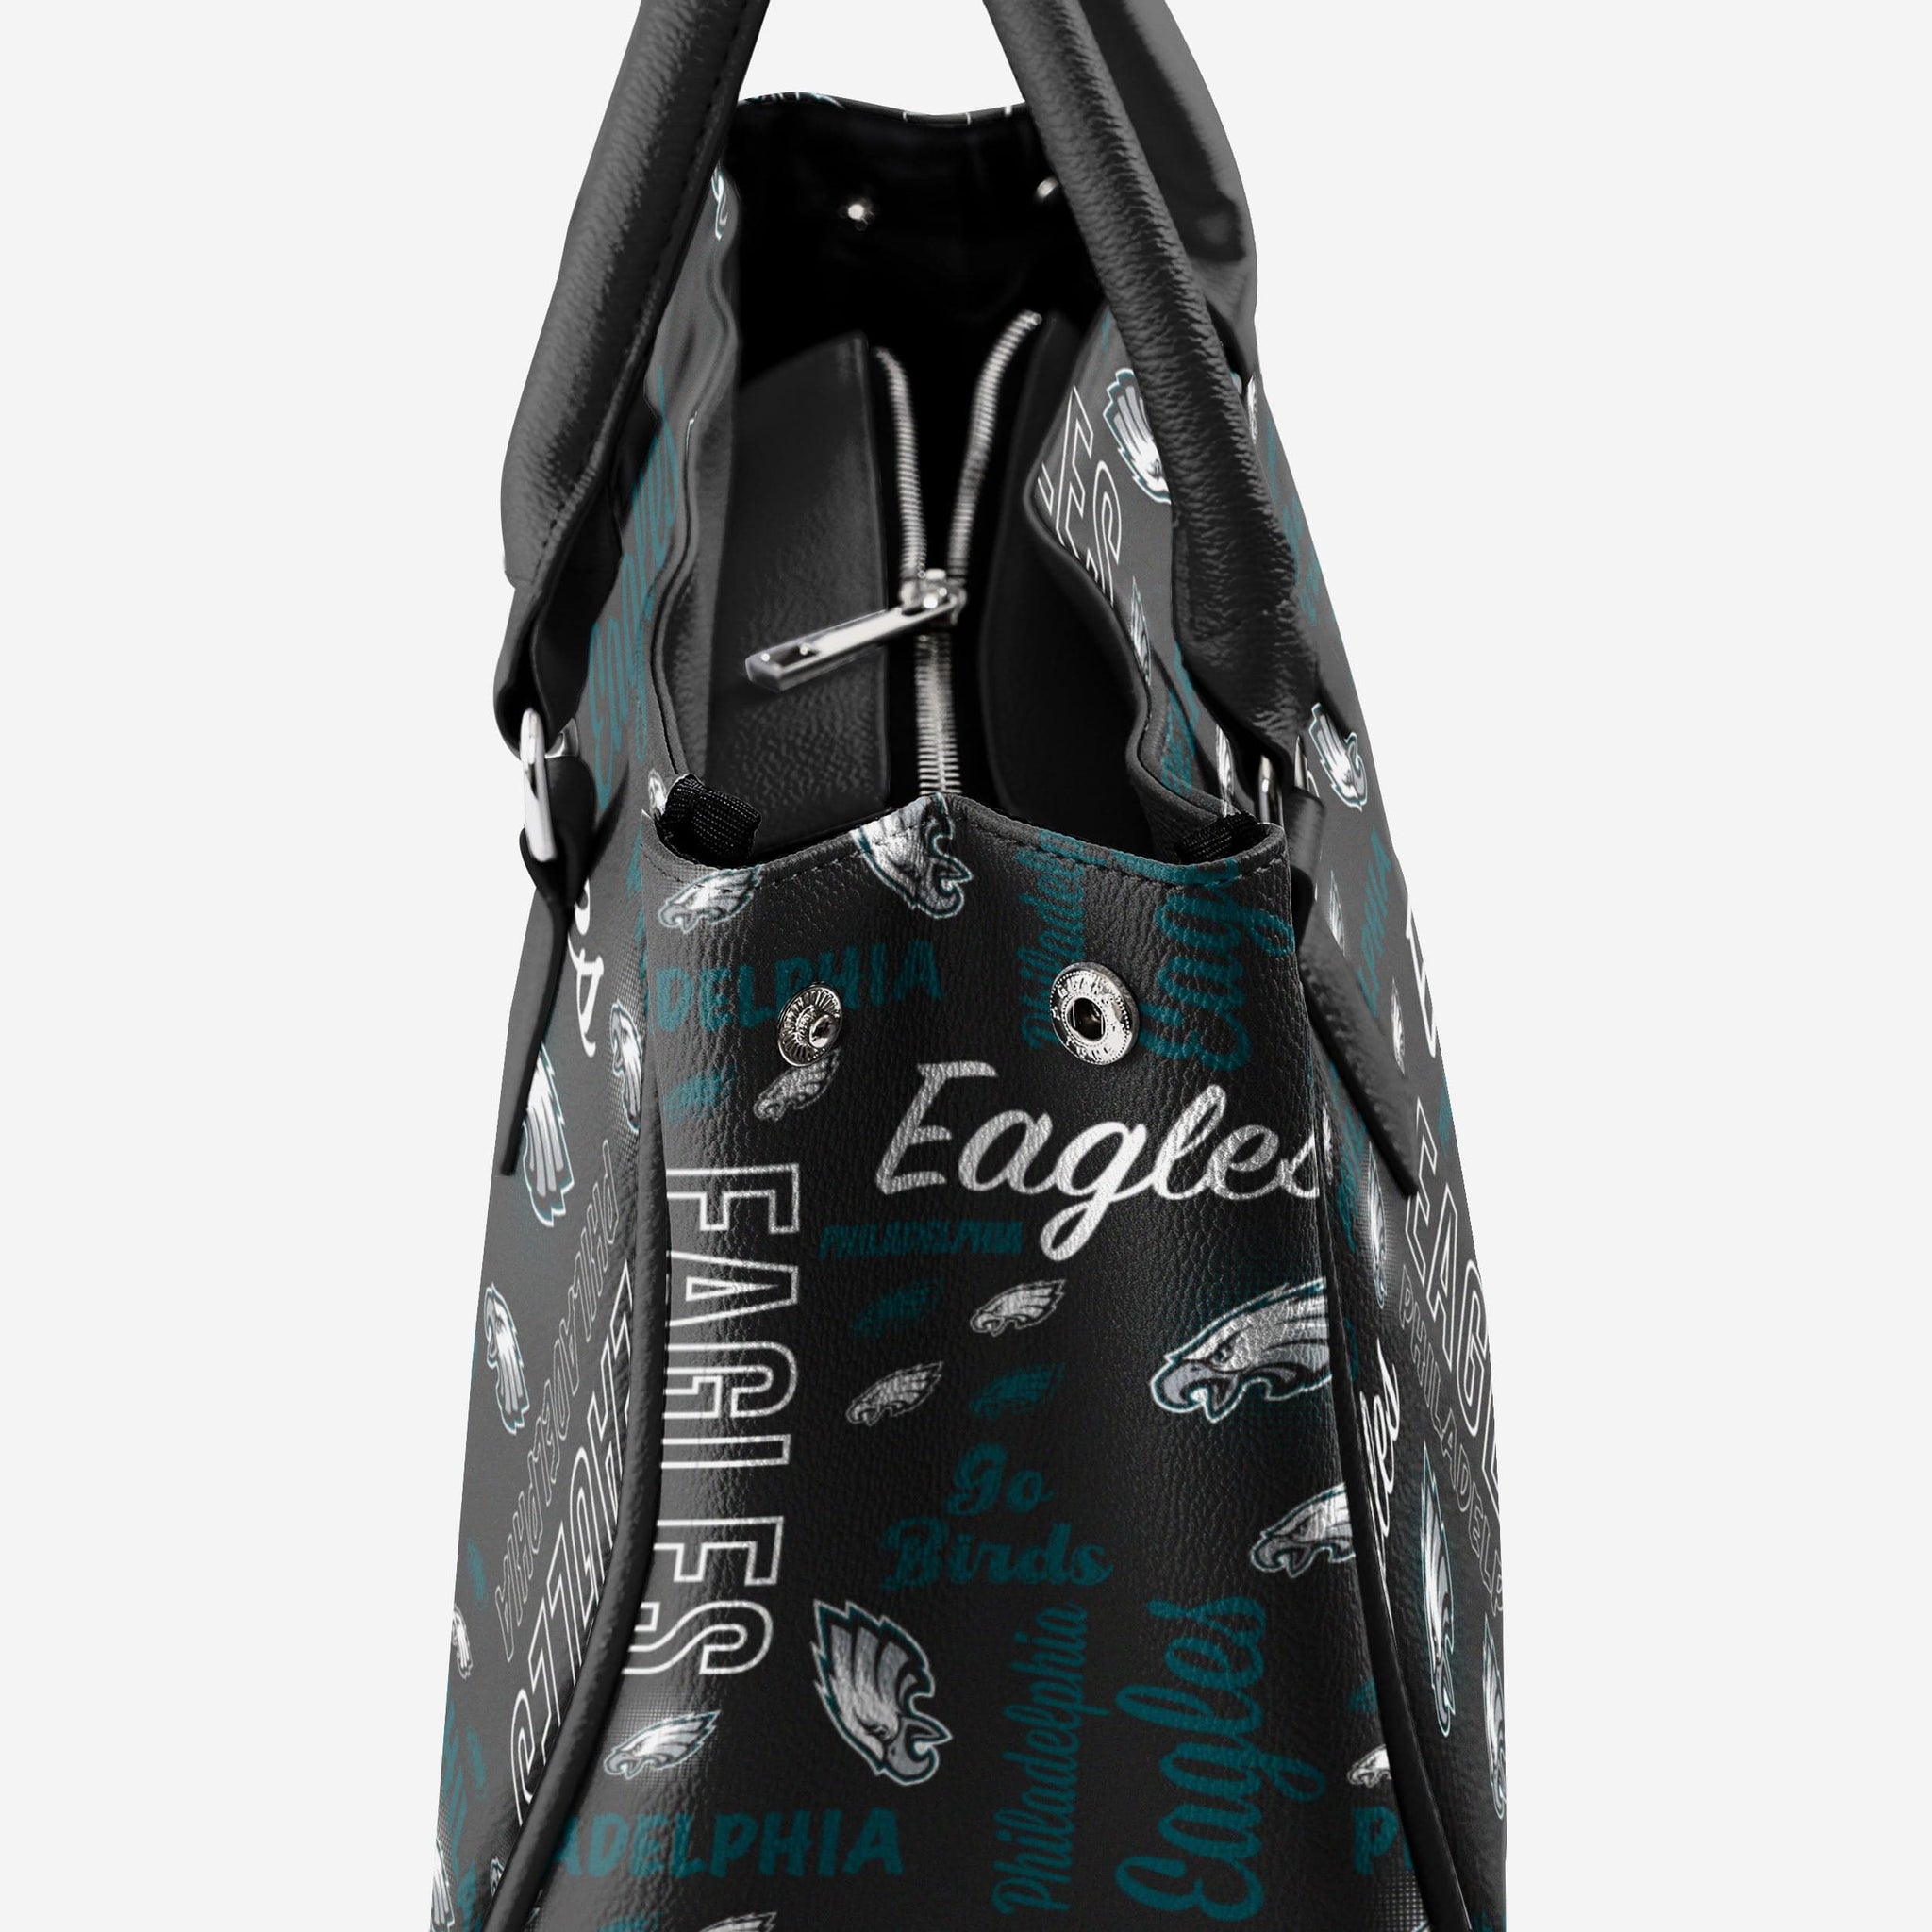 FOCO Philadelphia Eagles Officially Licensed Bags. Philadelphia Eagles  Purses, Backpacks, Coolers, & More.